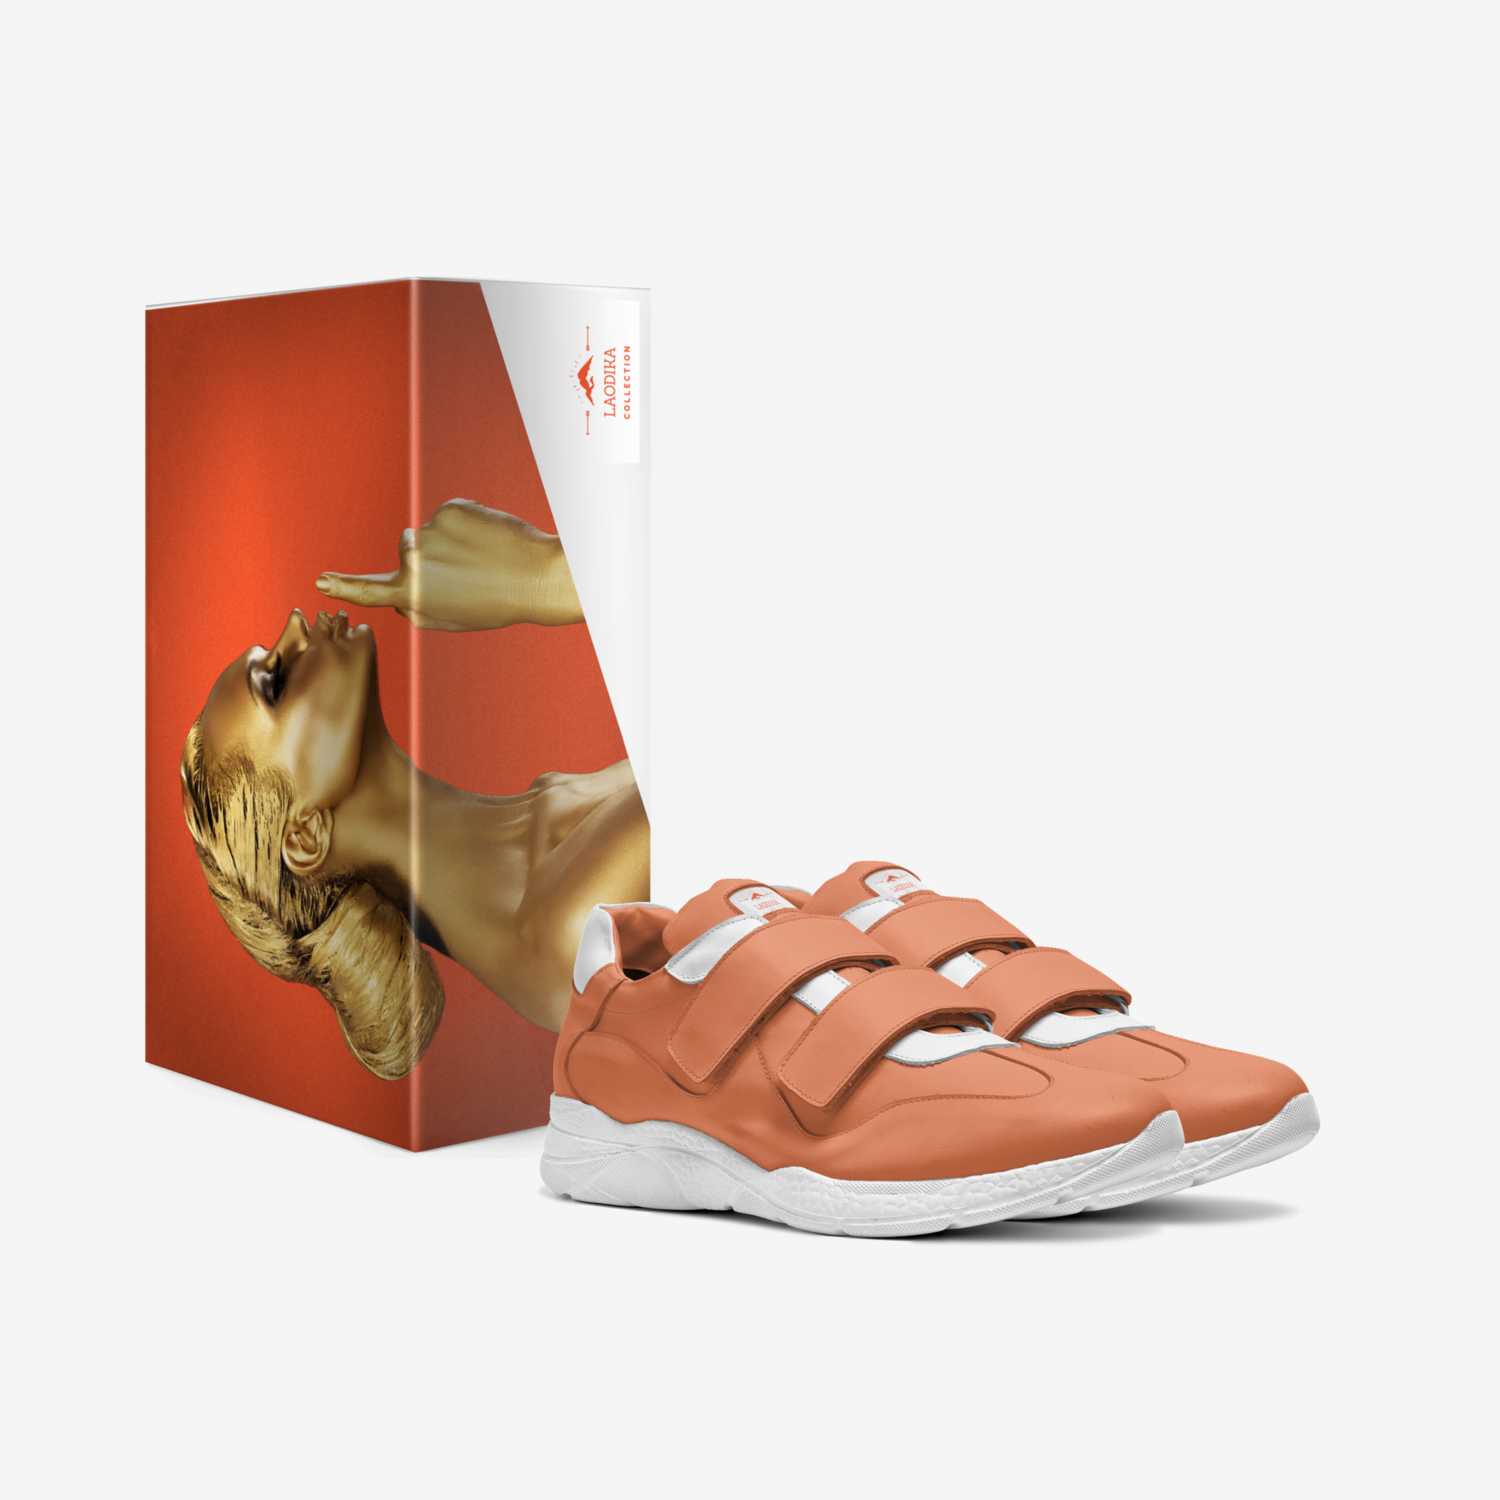 LAODIKA custom made in Italy shoes by Muhammet Mert TopaloĞlu | Box view